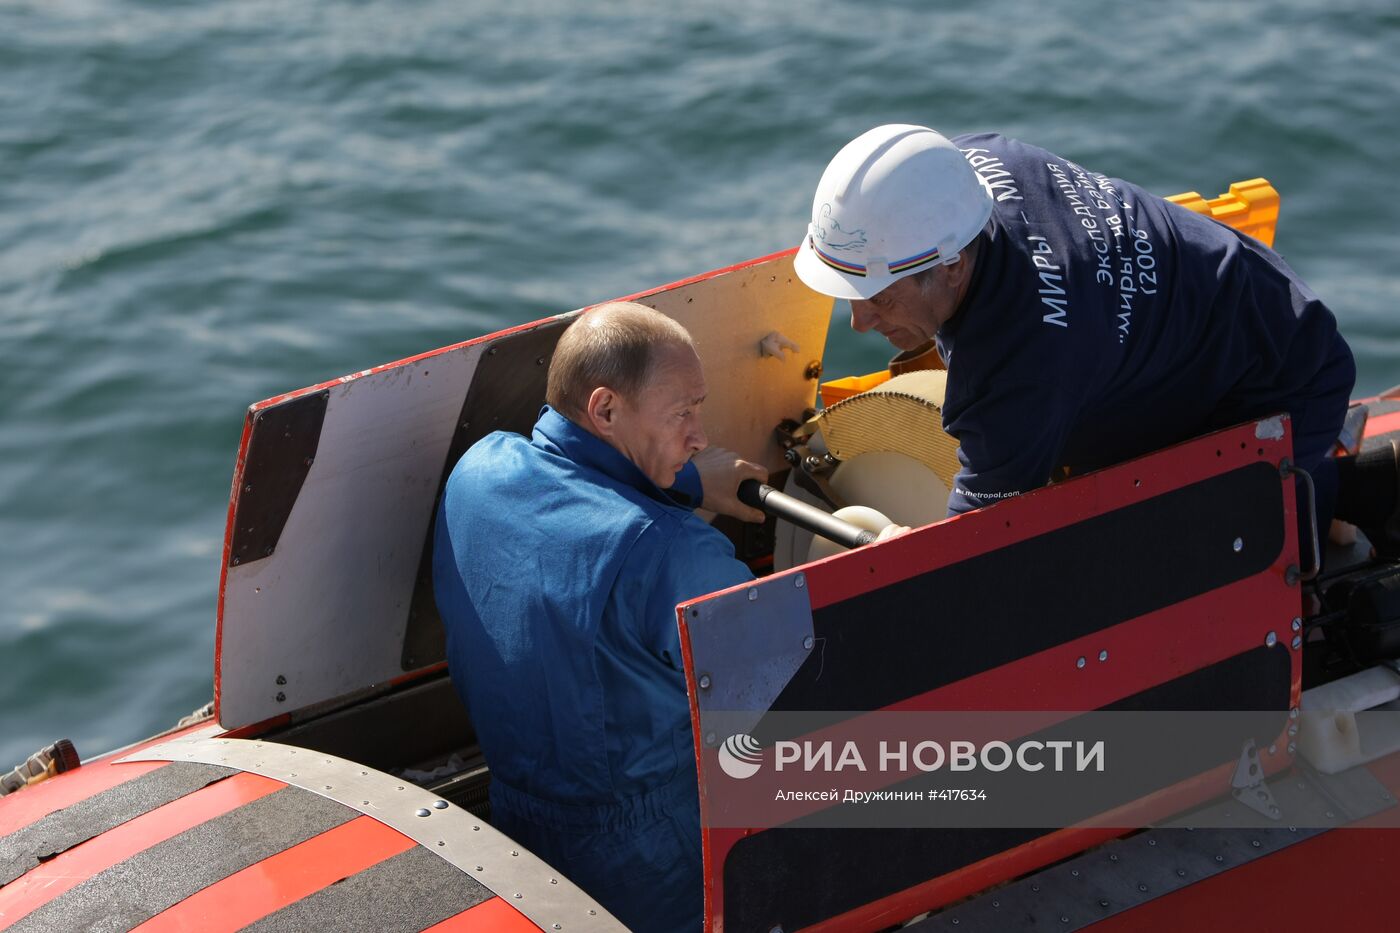 В. Путин совершил погружение на дно озера Байкал